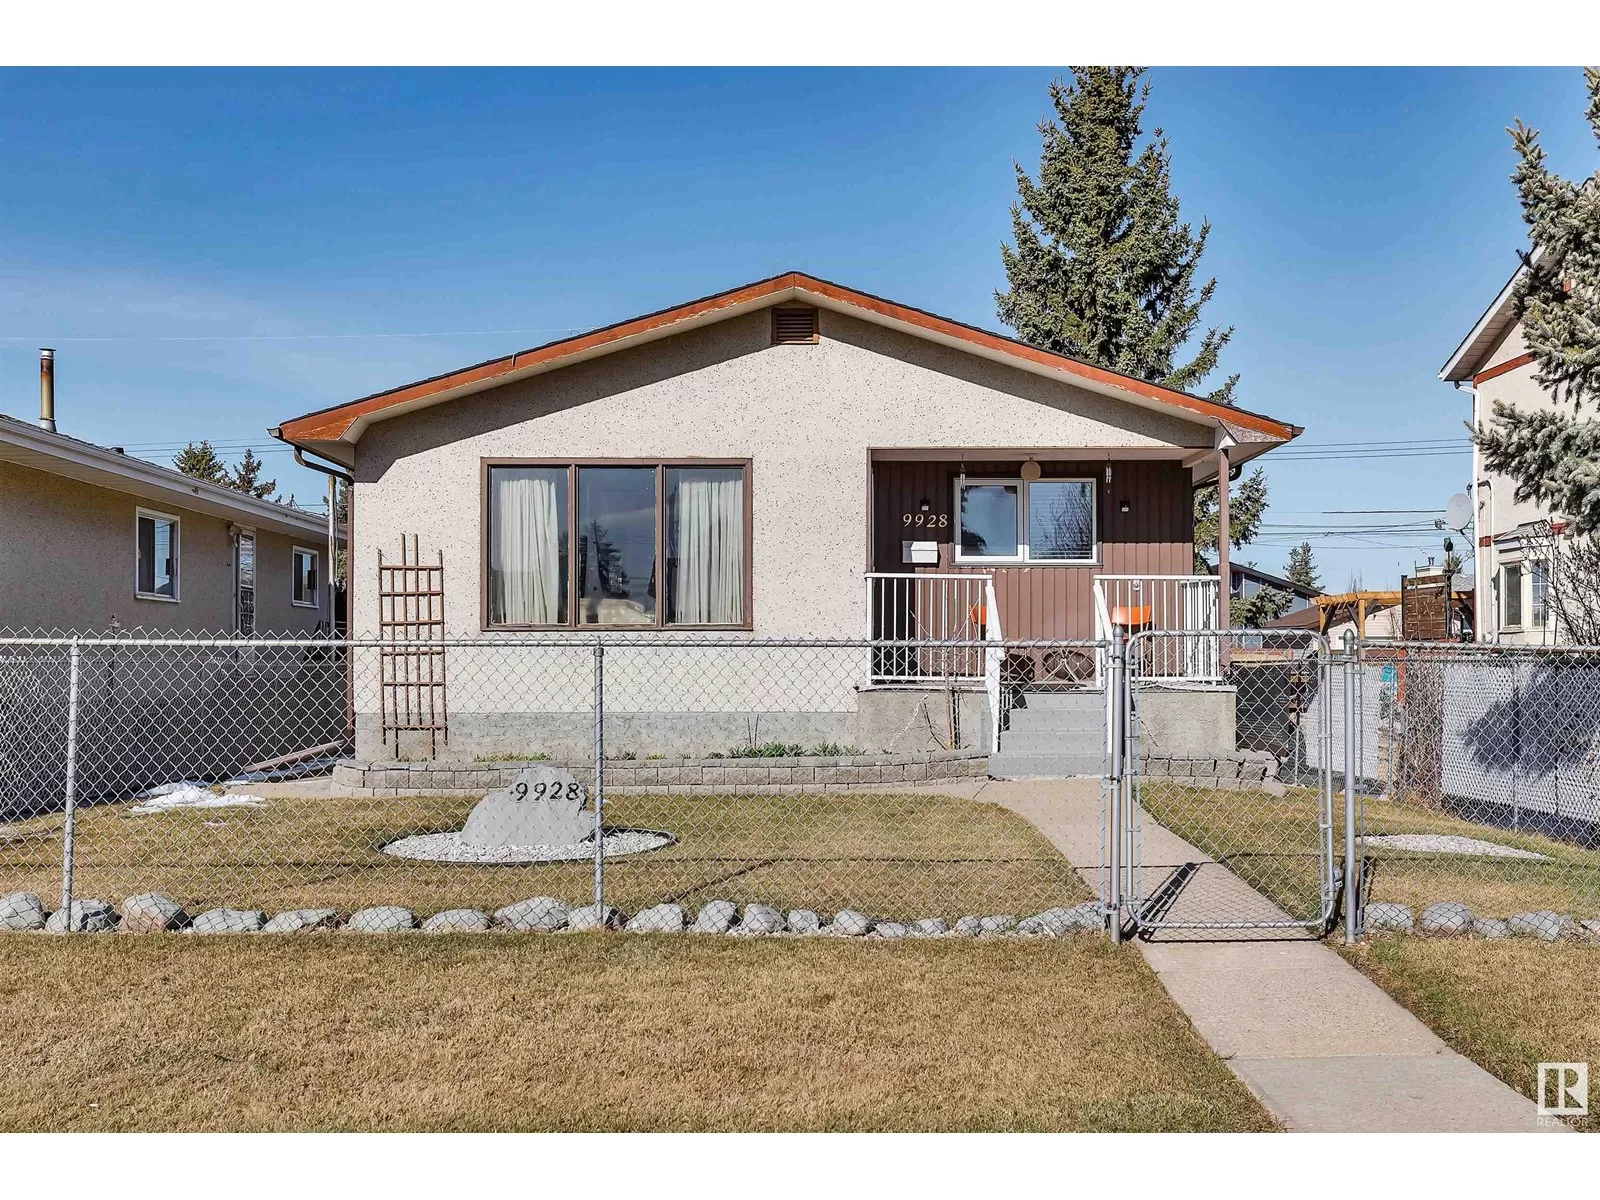 House for rent: 9928 159 St Nw, Edmonton, Alberta T5P 2Z7